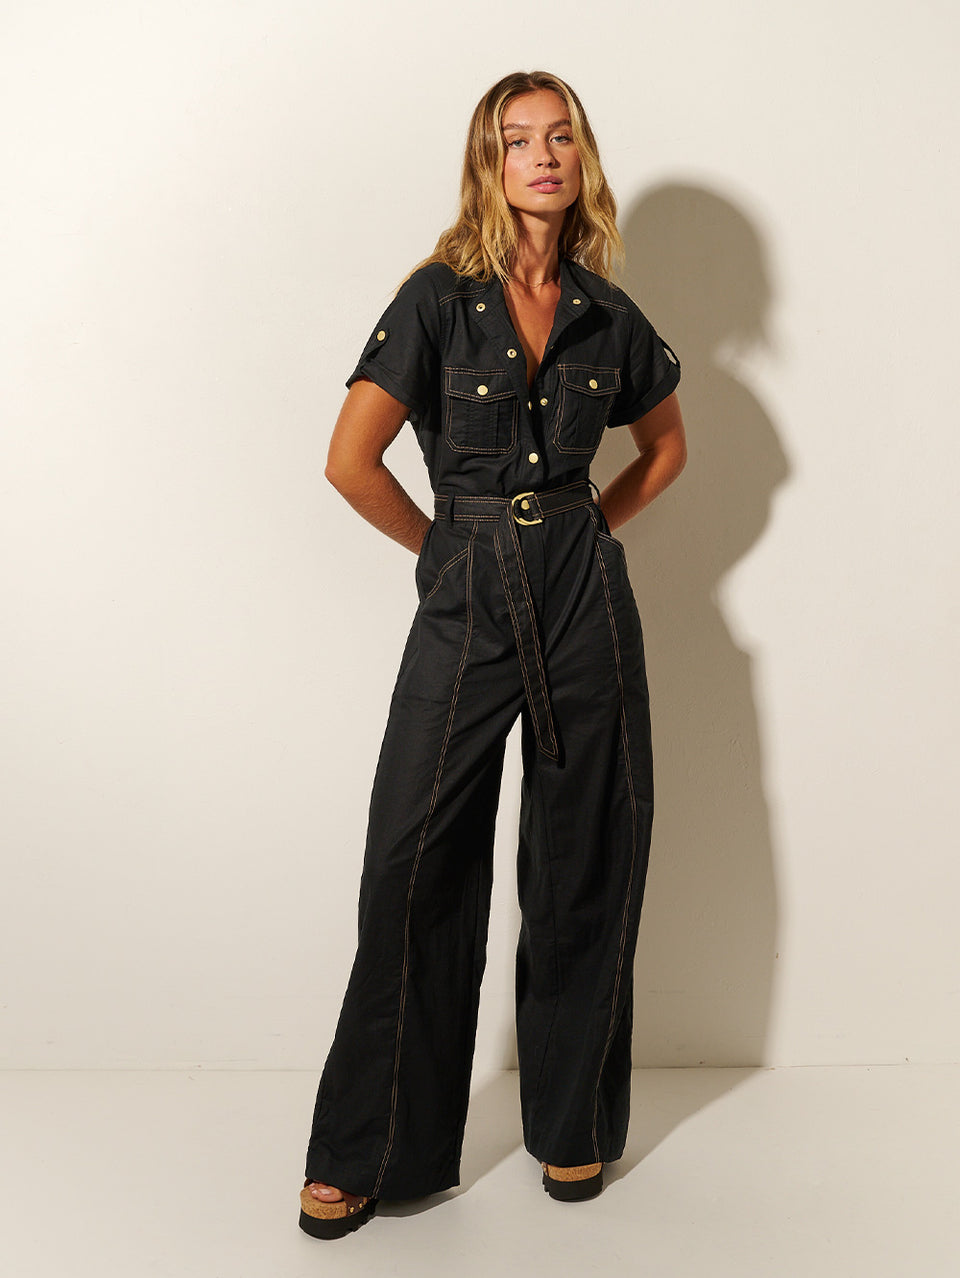 Studio model wears the KIVARI Ebony Jumpsuit: a black linen jumpsuit with gold buttons, topstitch details, a button-front with signature hardware and belt.